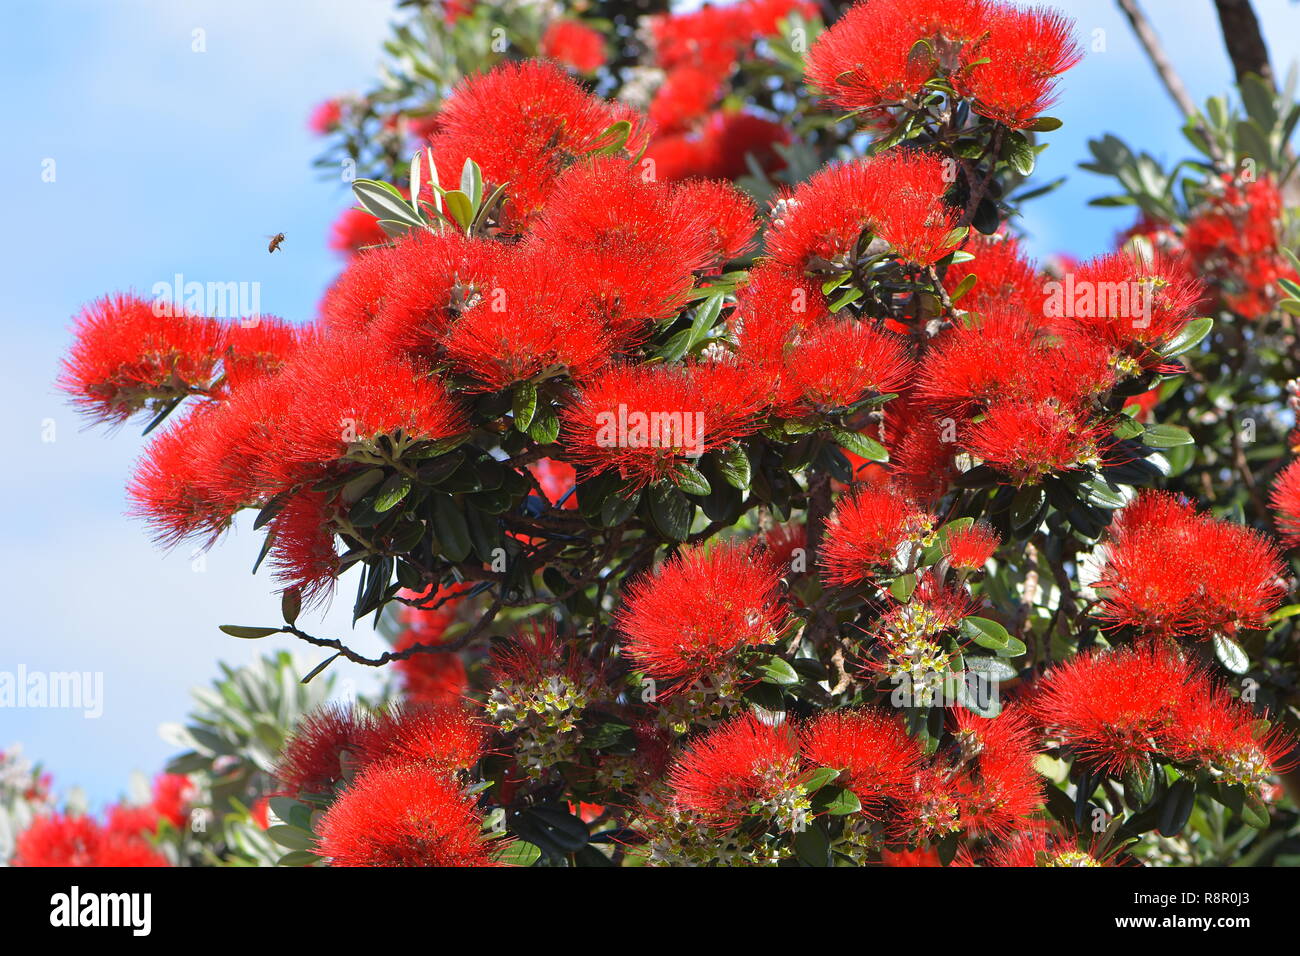 Detail of bright red flowers of New Zealand Christmas tree coastal pohutukawa Metrosideros excelsa. Stock Photo